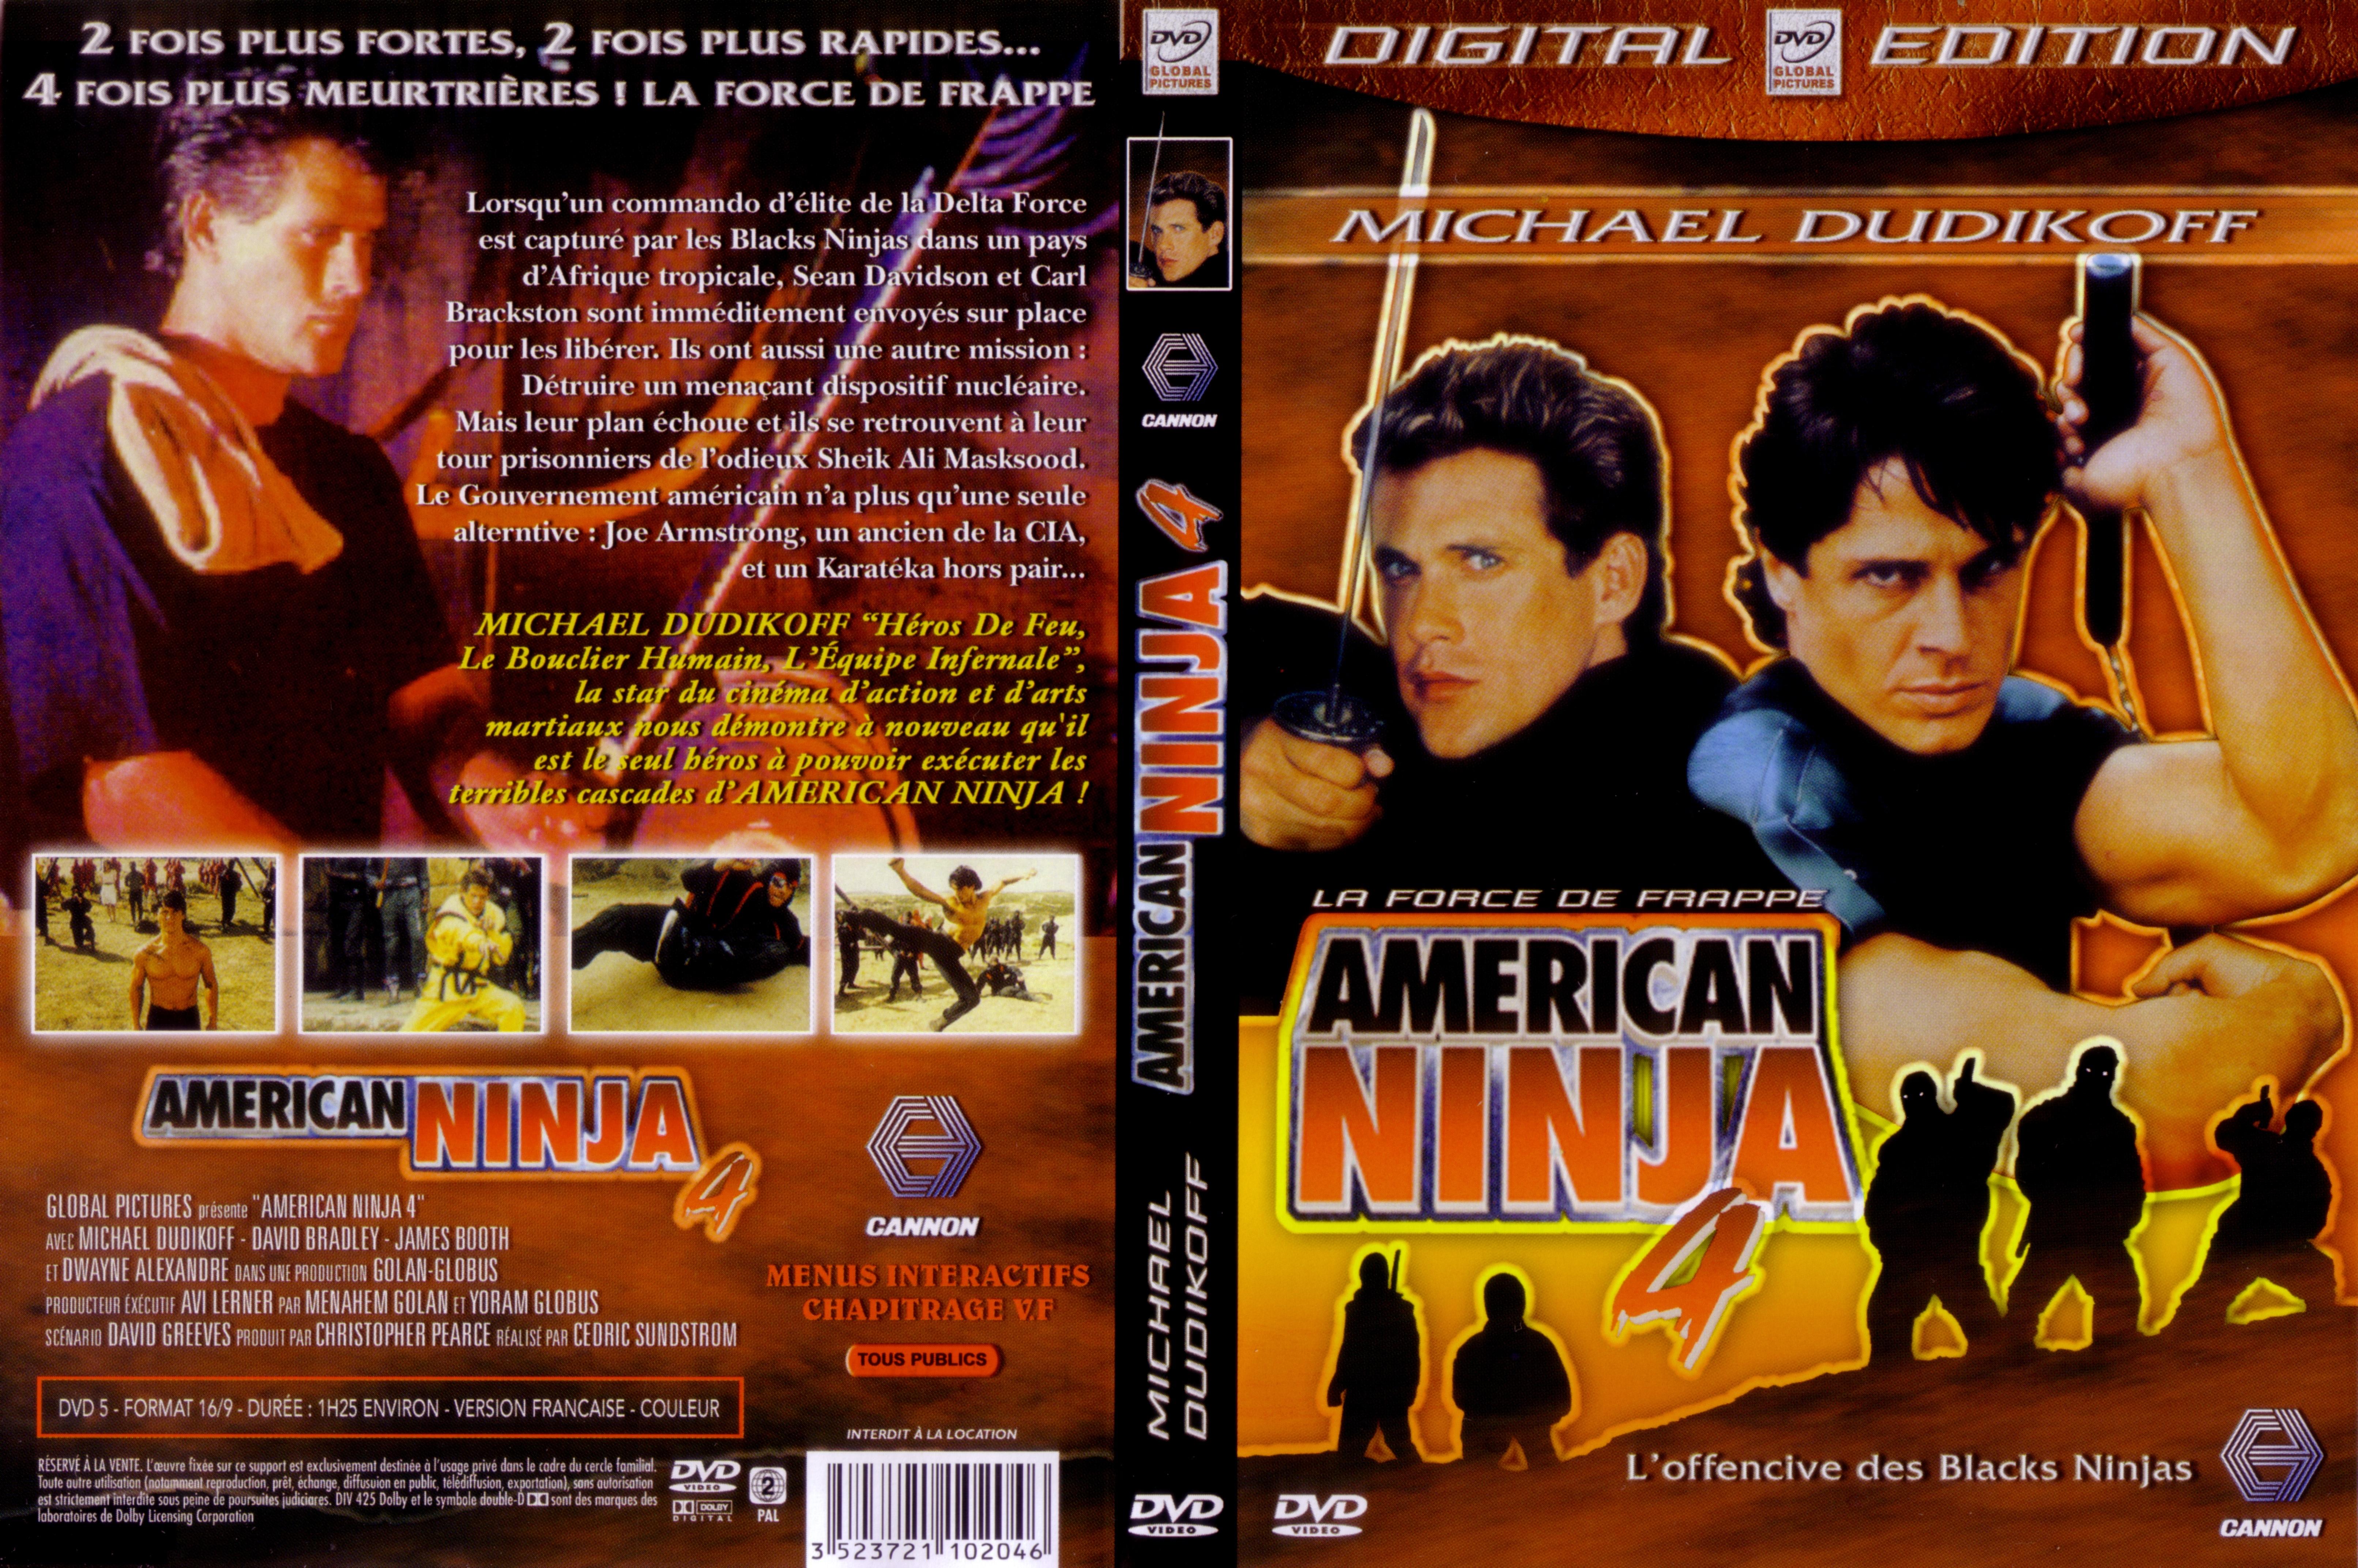 Jaquette DVD American ninja 4